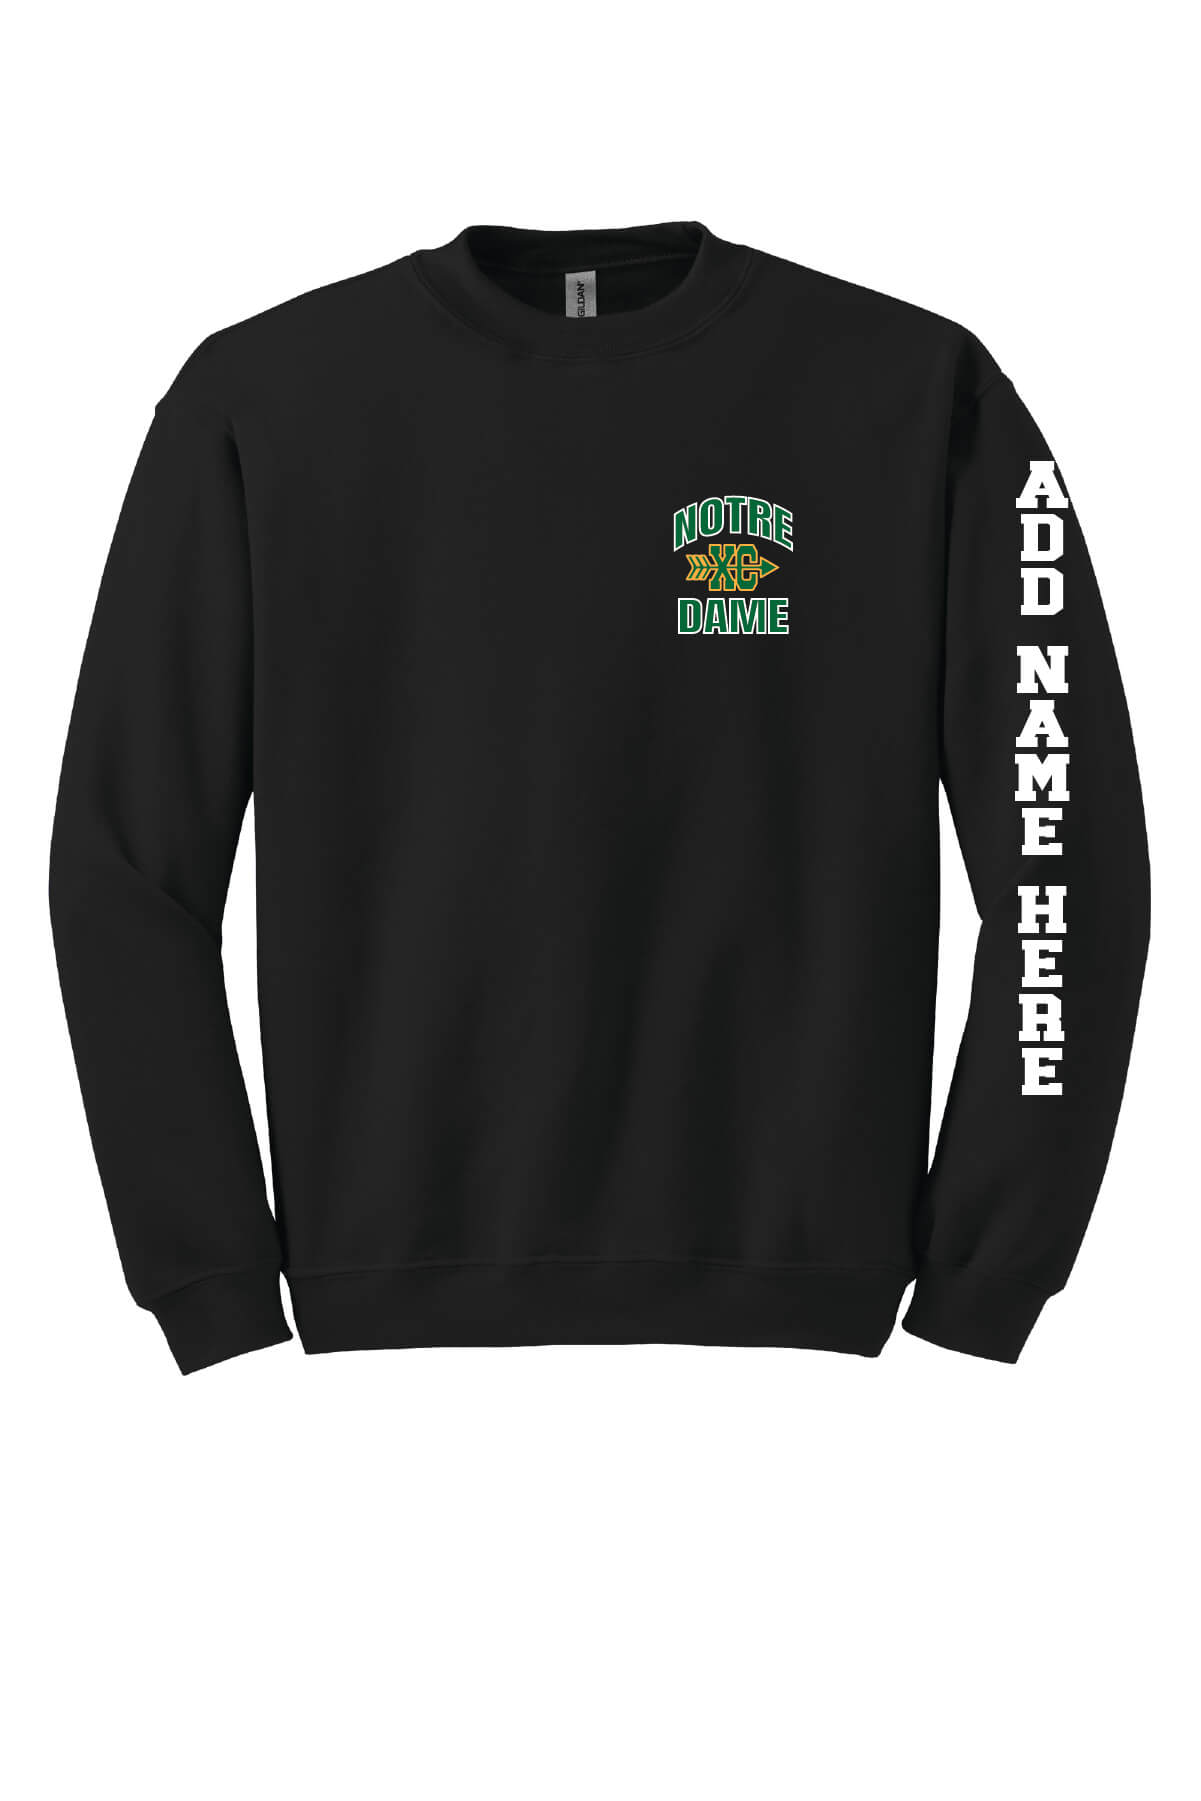 Notre Dame XC Soccer Crewneck Sweatshirt black